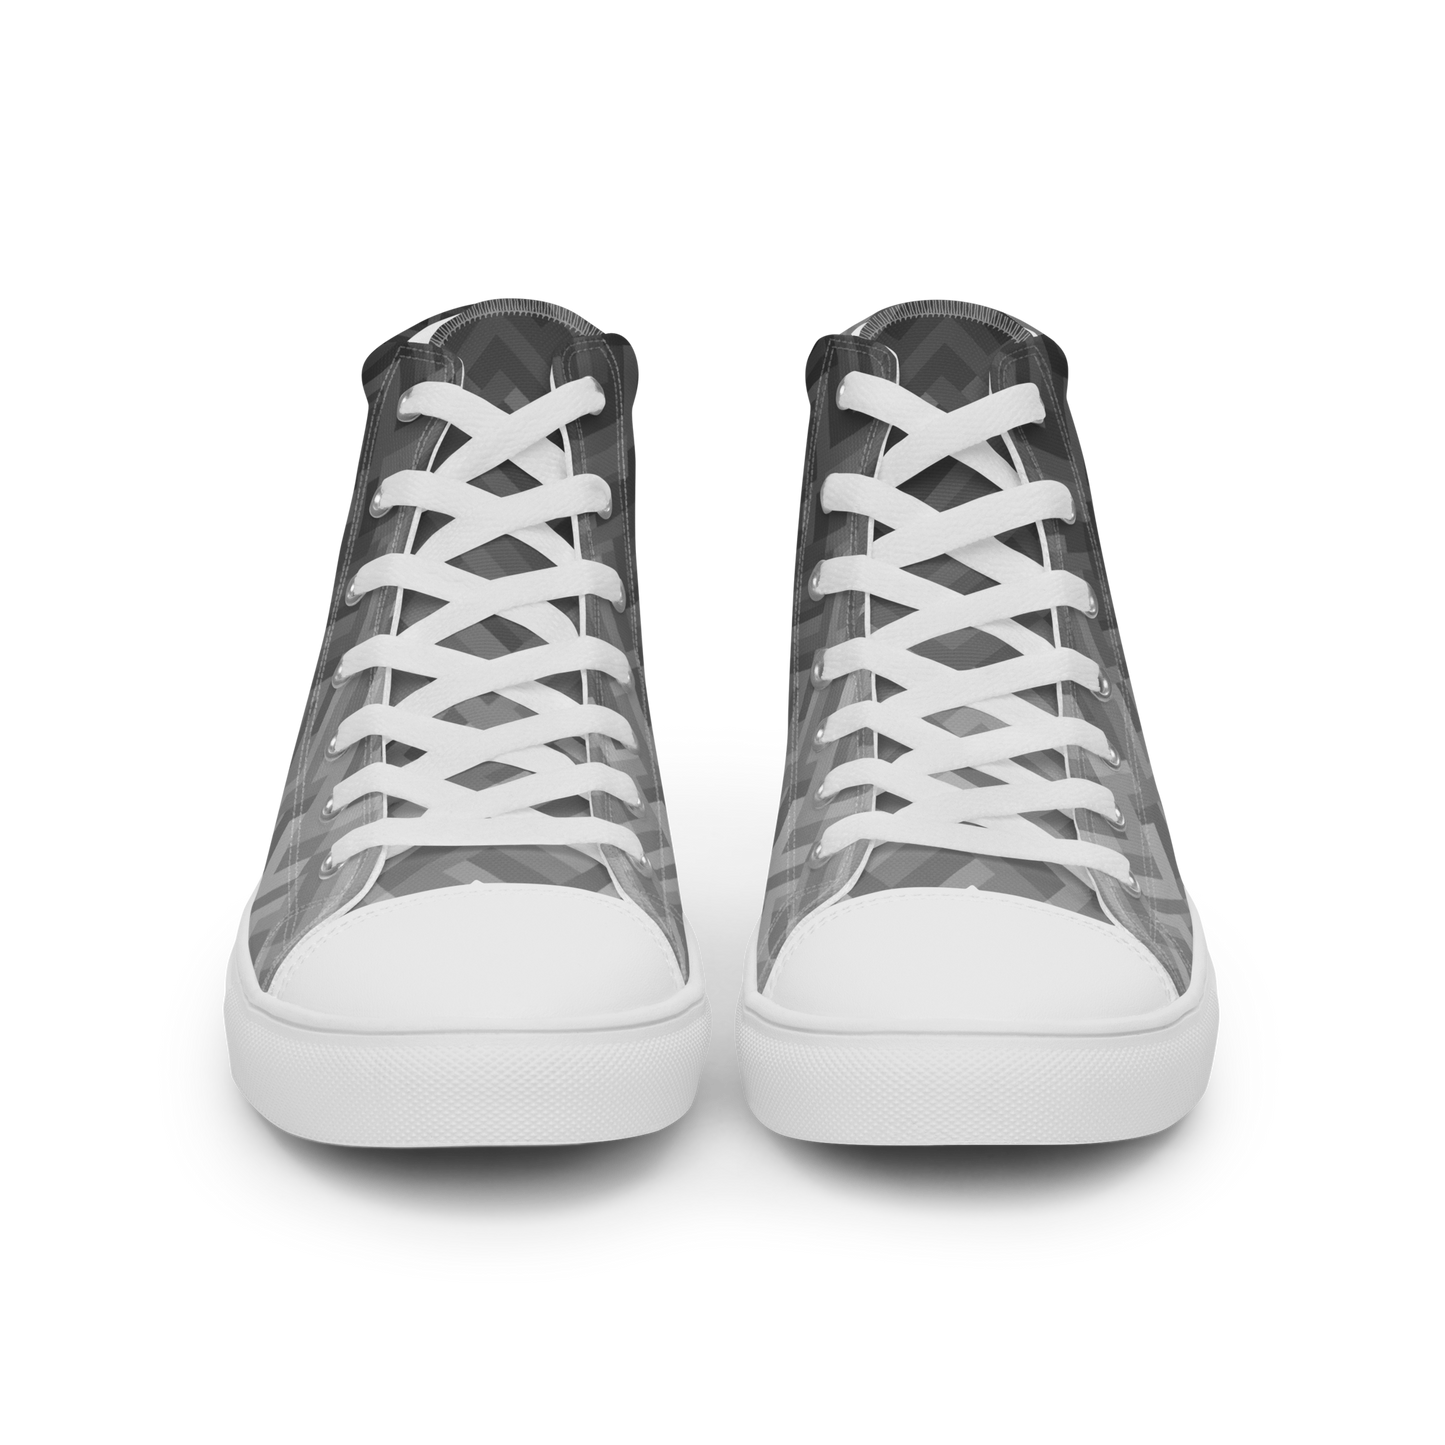 Men's Canvas Sneakers ❯ Polygonal Gradient ❯ Silver